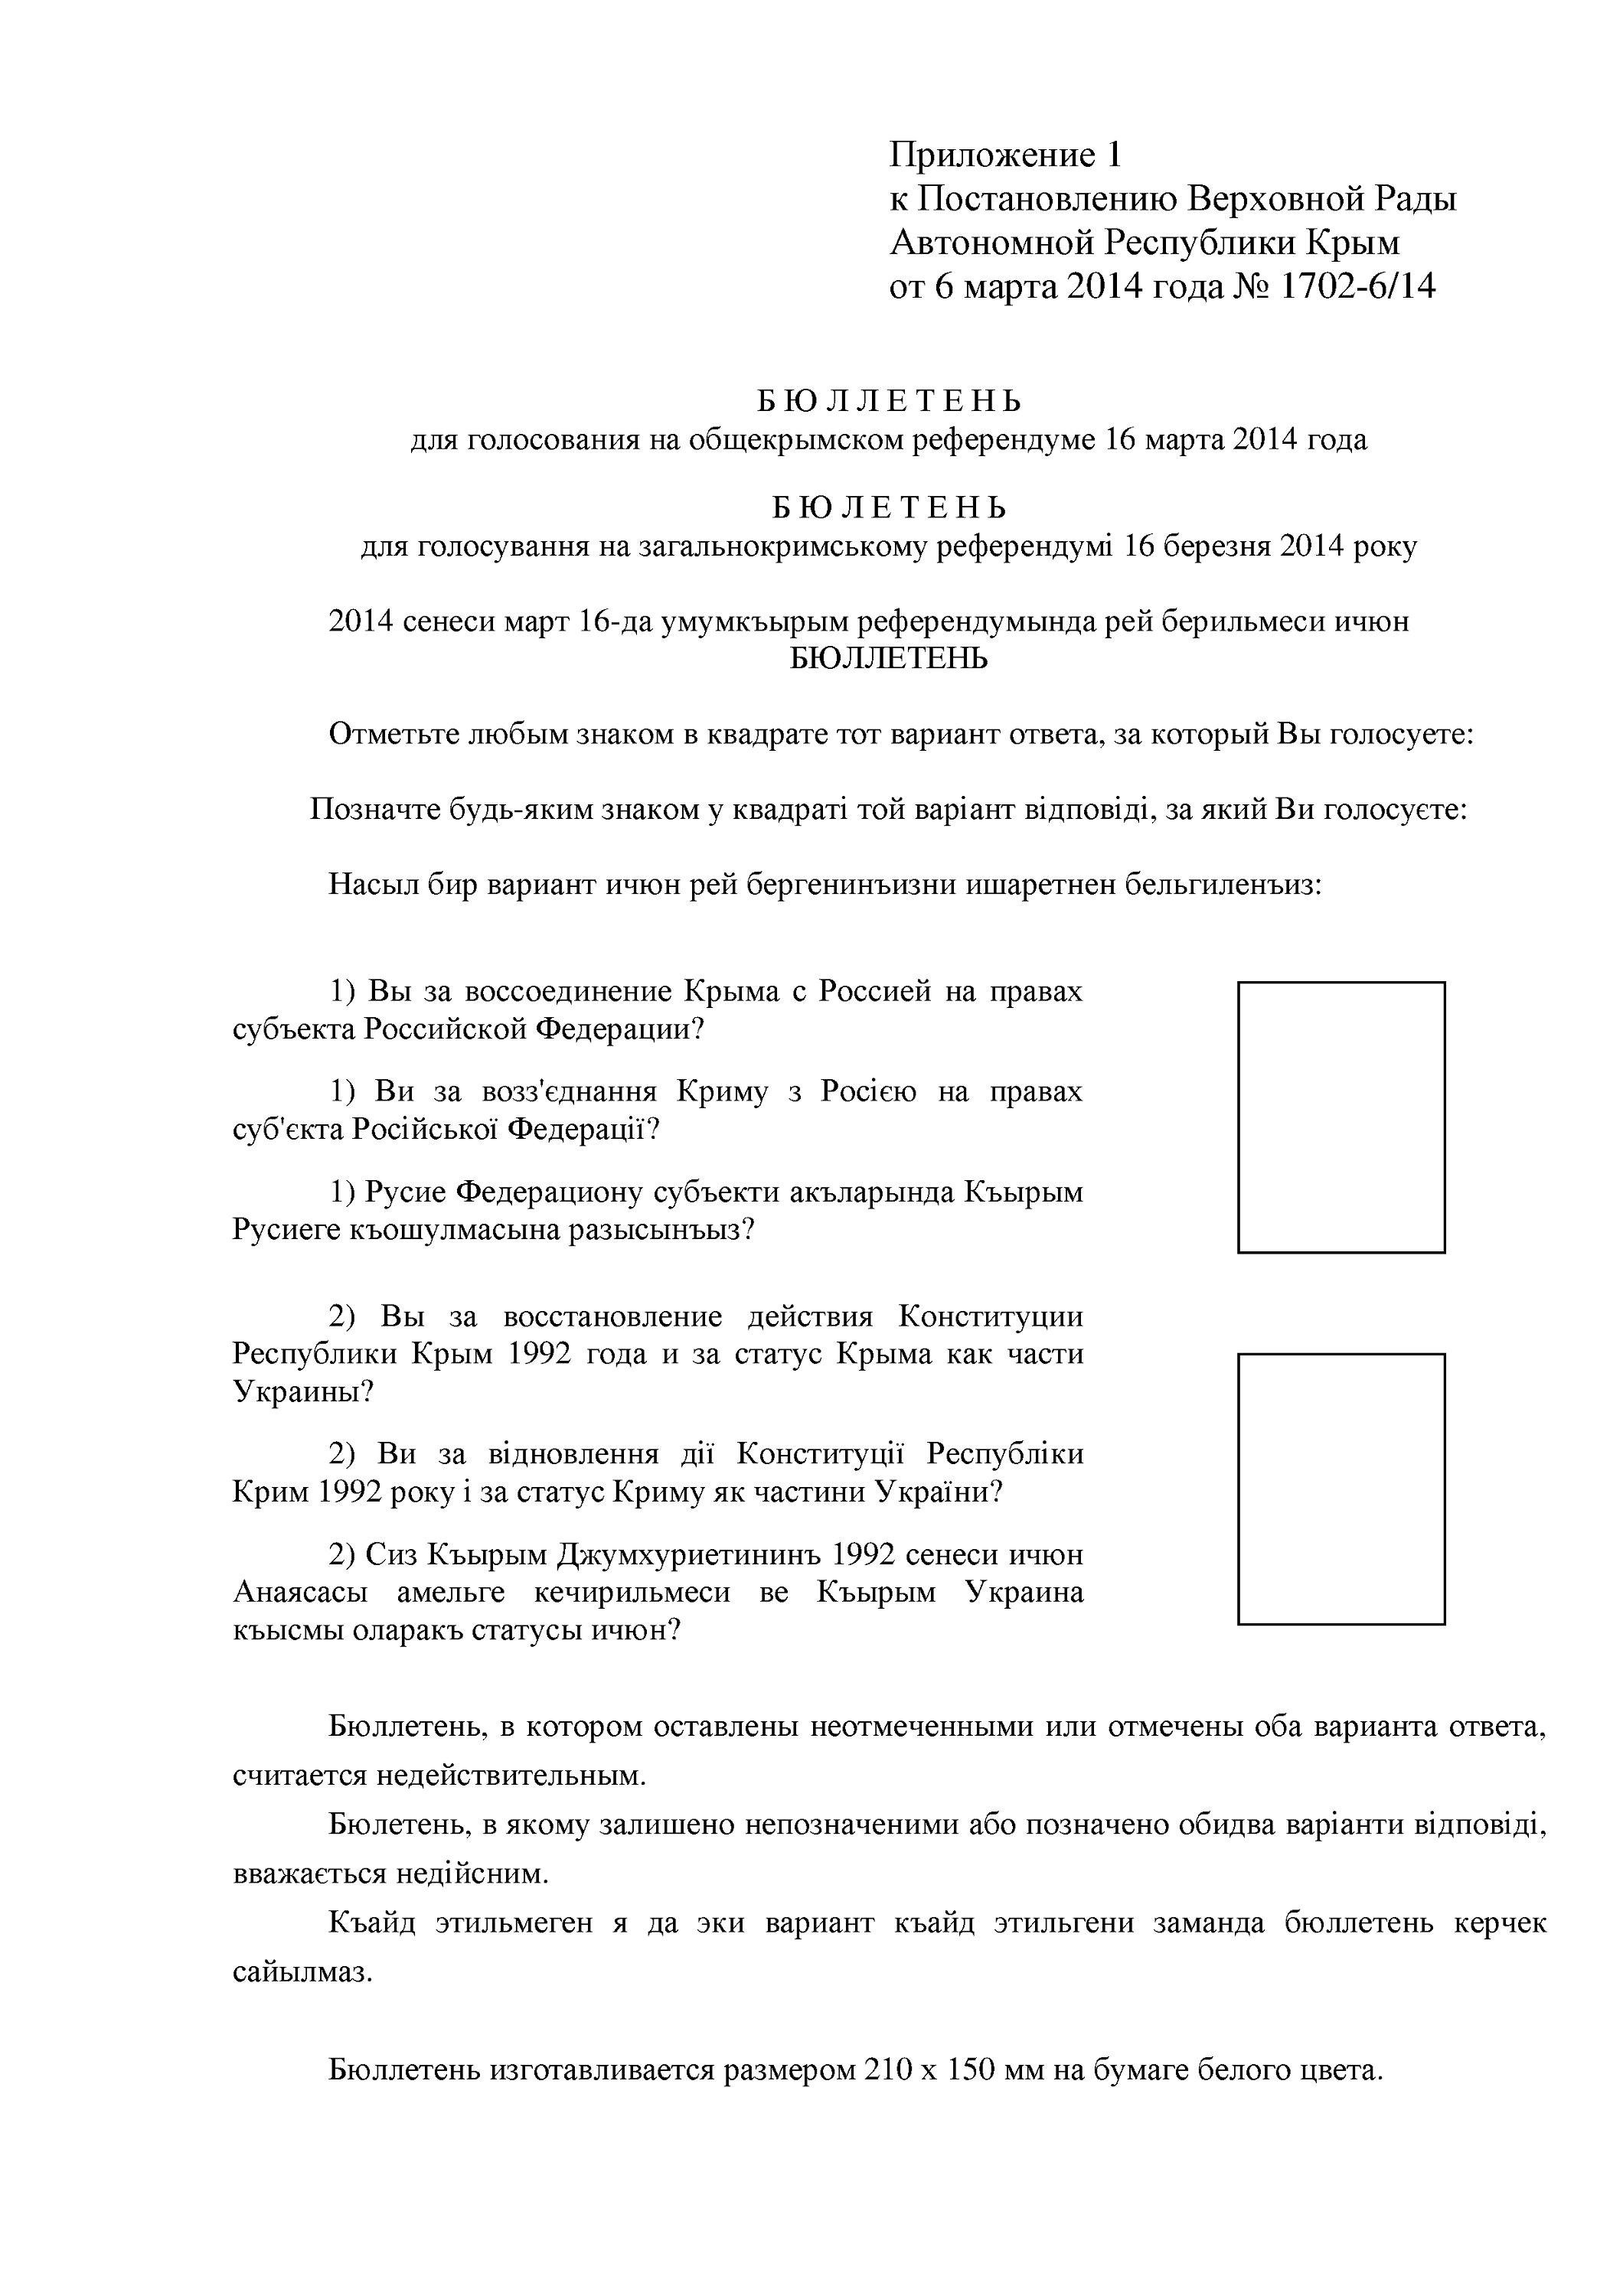 https://upload.wikimedia.org/wikipedia/commons/9/94/2014_Crimean_referendum_ballot.png